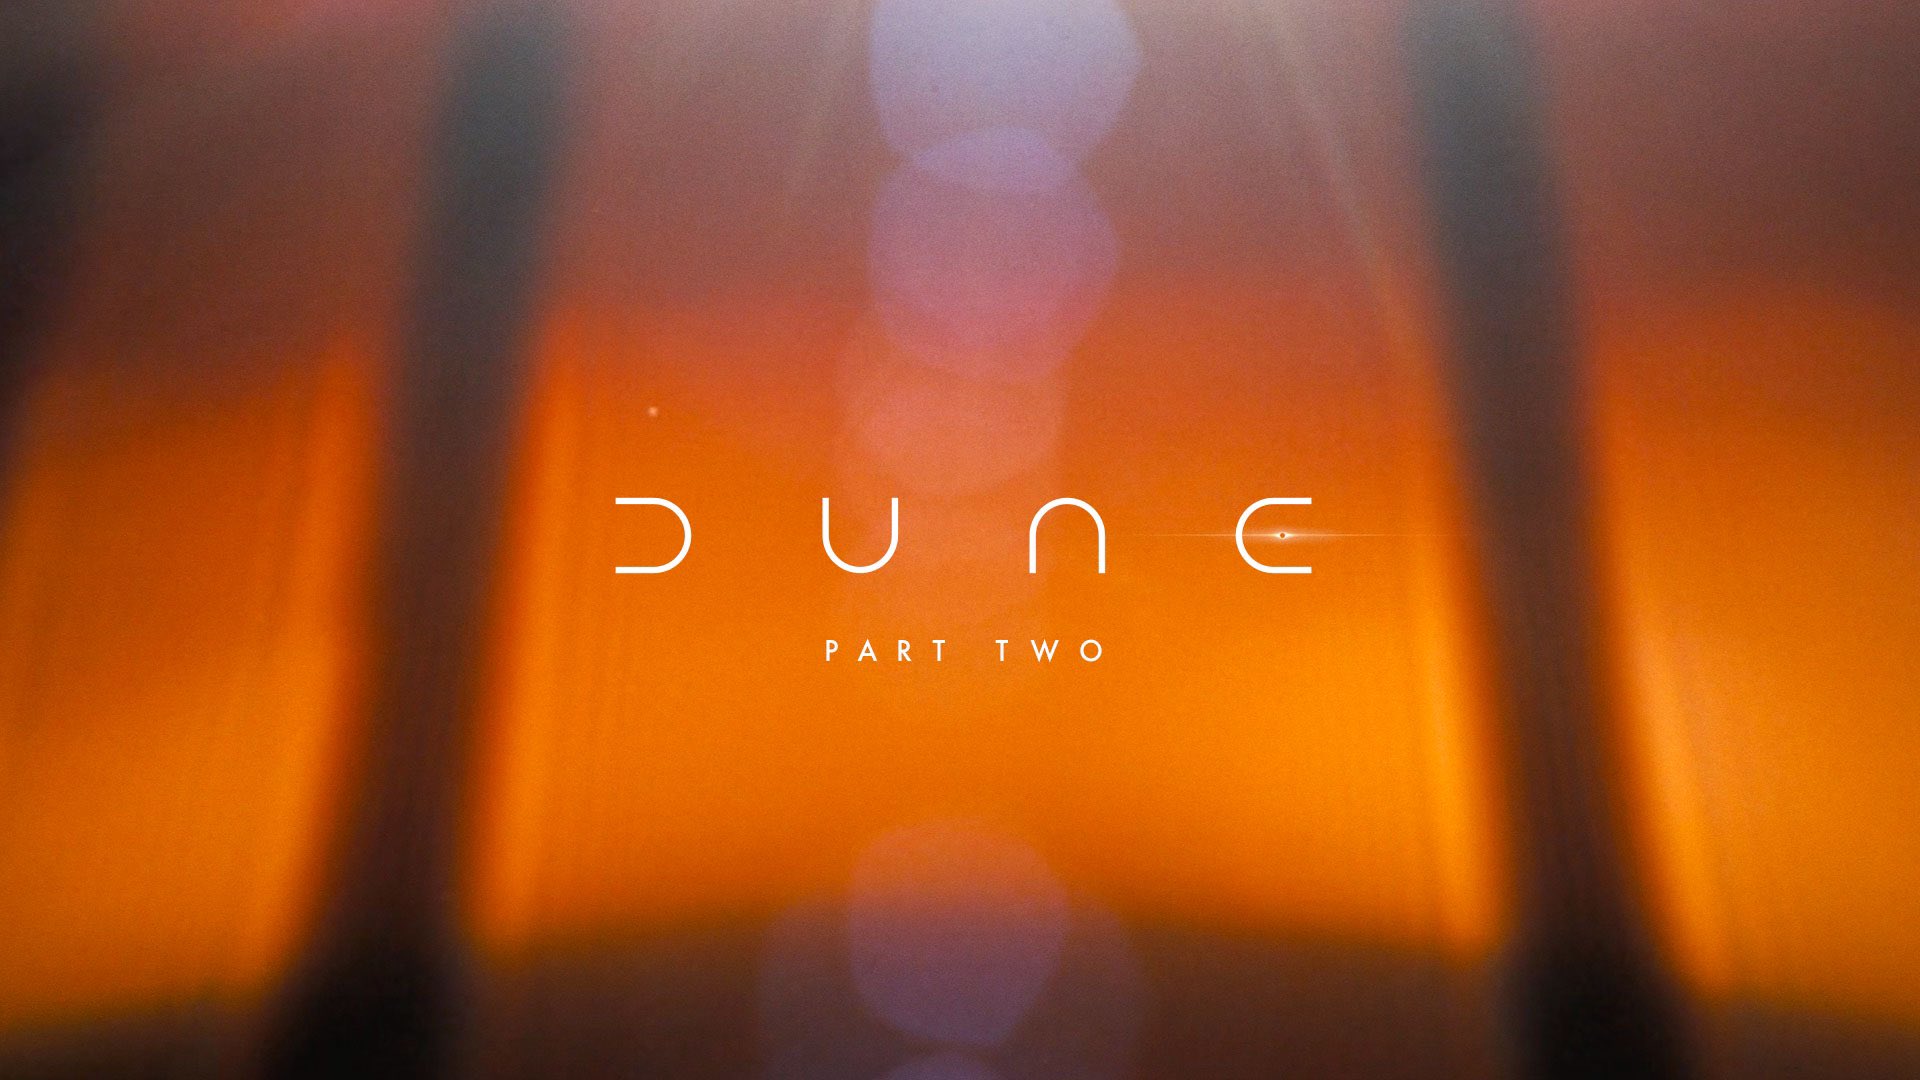 Blir Dune: Part Two en av årets bästa filmer?